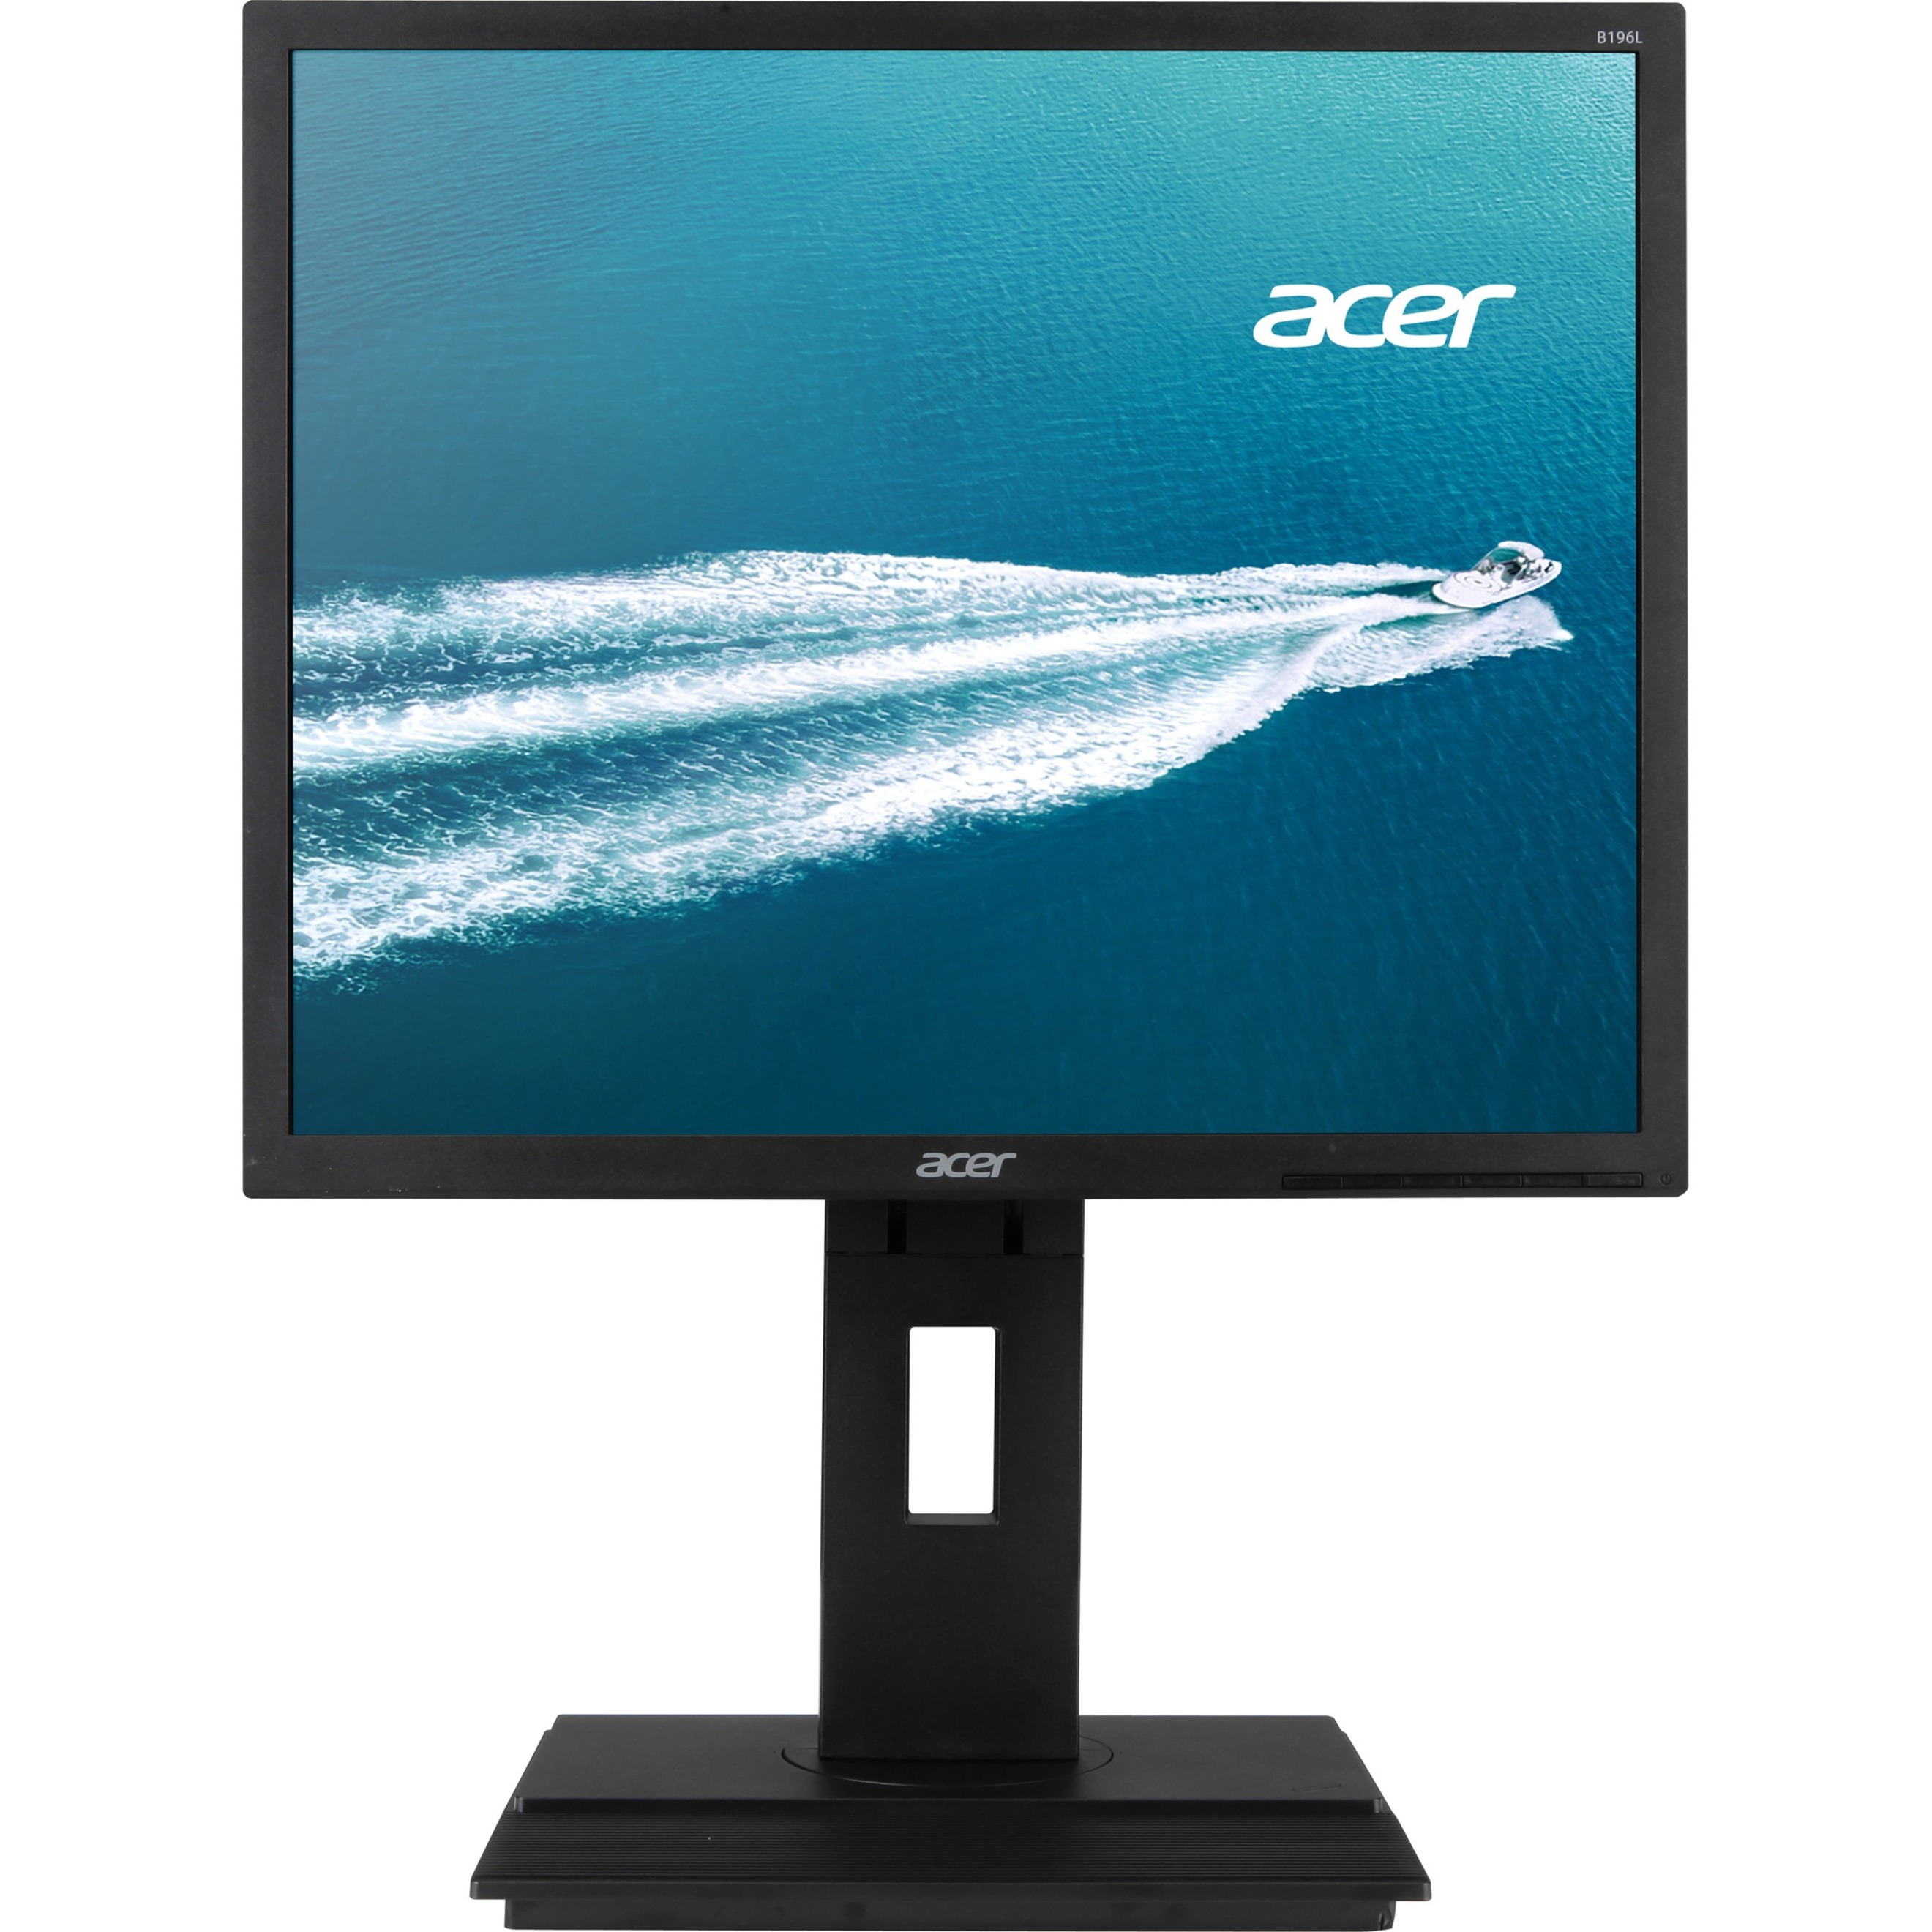 Acer B196L - LED monitor - 19" - image 1 of 5